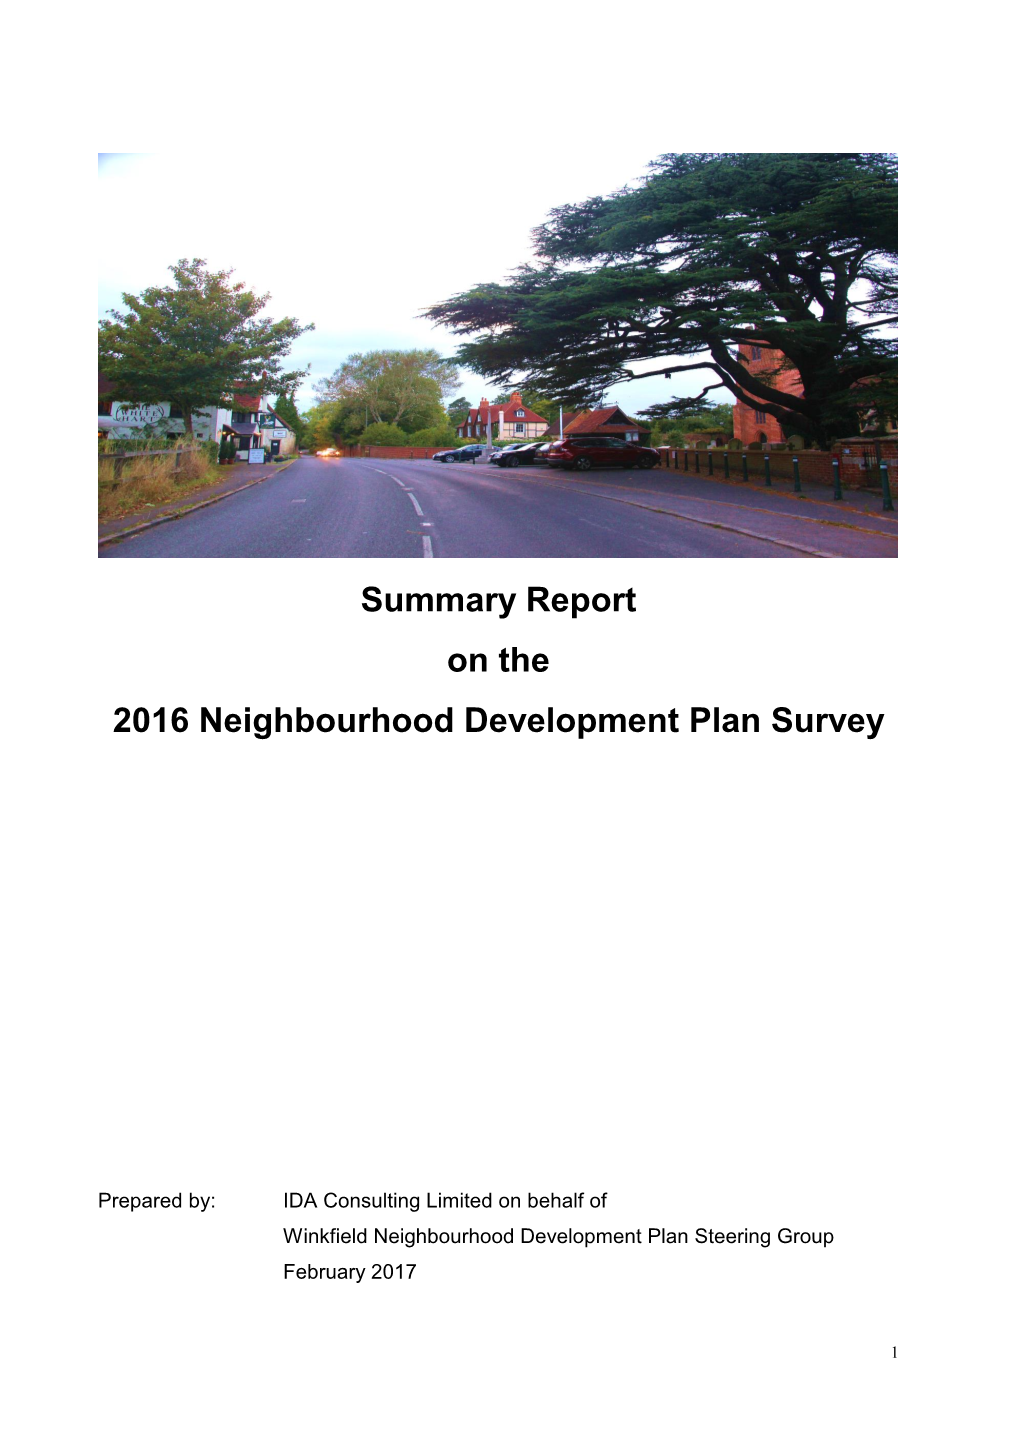 Summary Report on the 2016 Neighbourhood Development Plan Survey